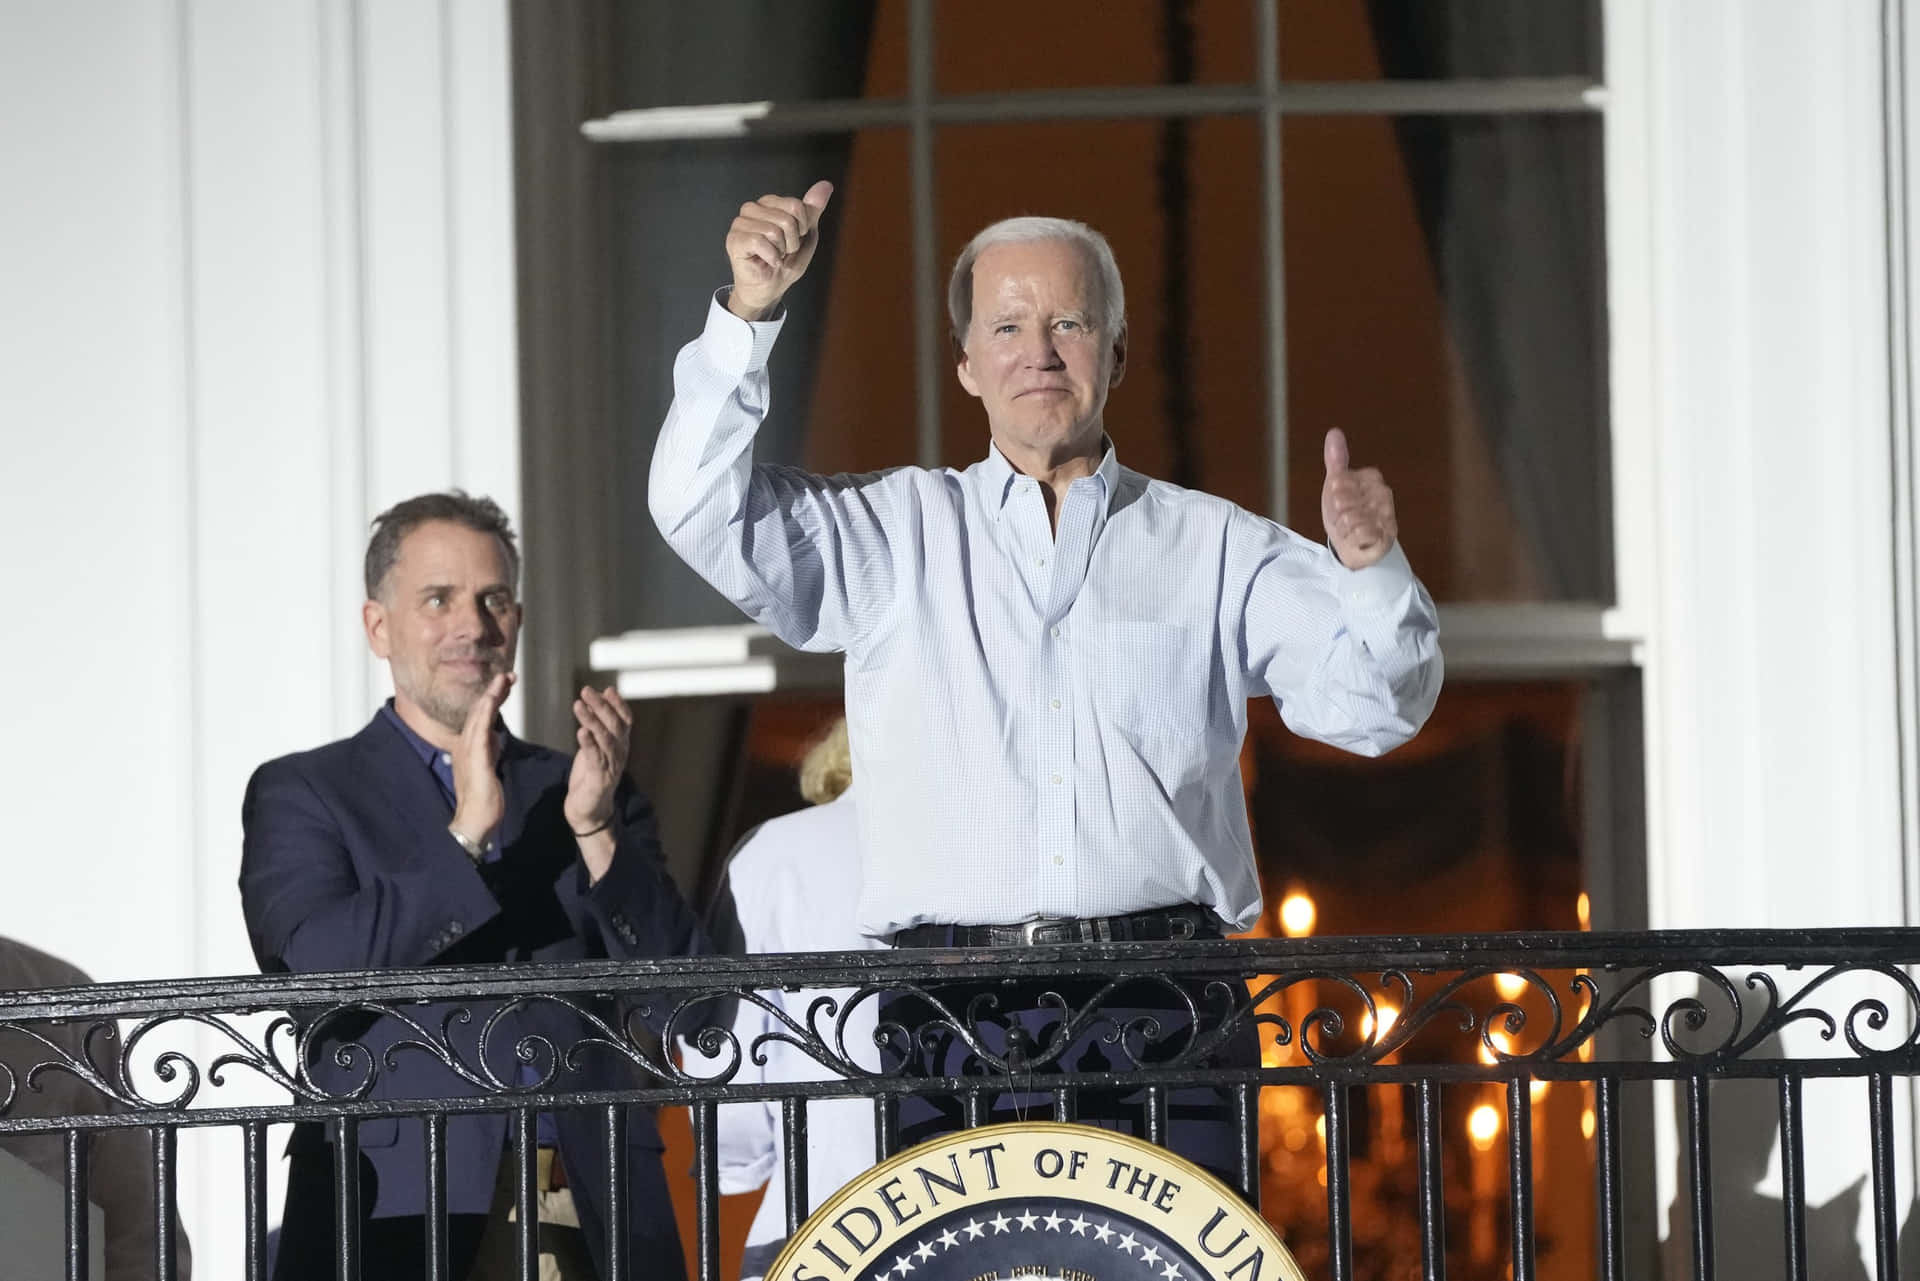 Hunterbiden Applaude La Foto Di Joe Biden.